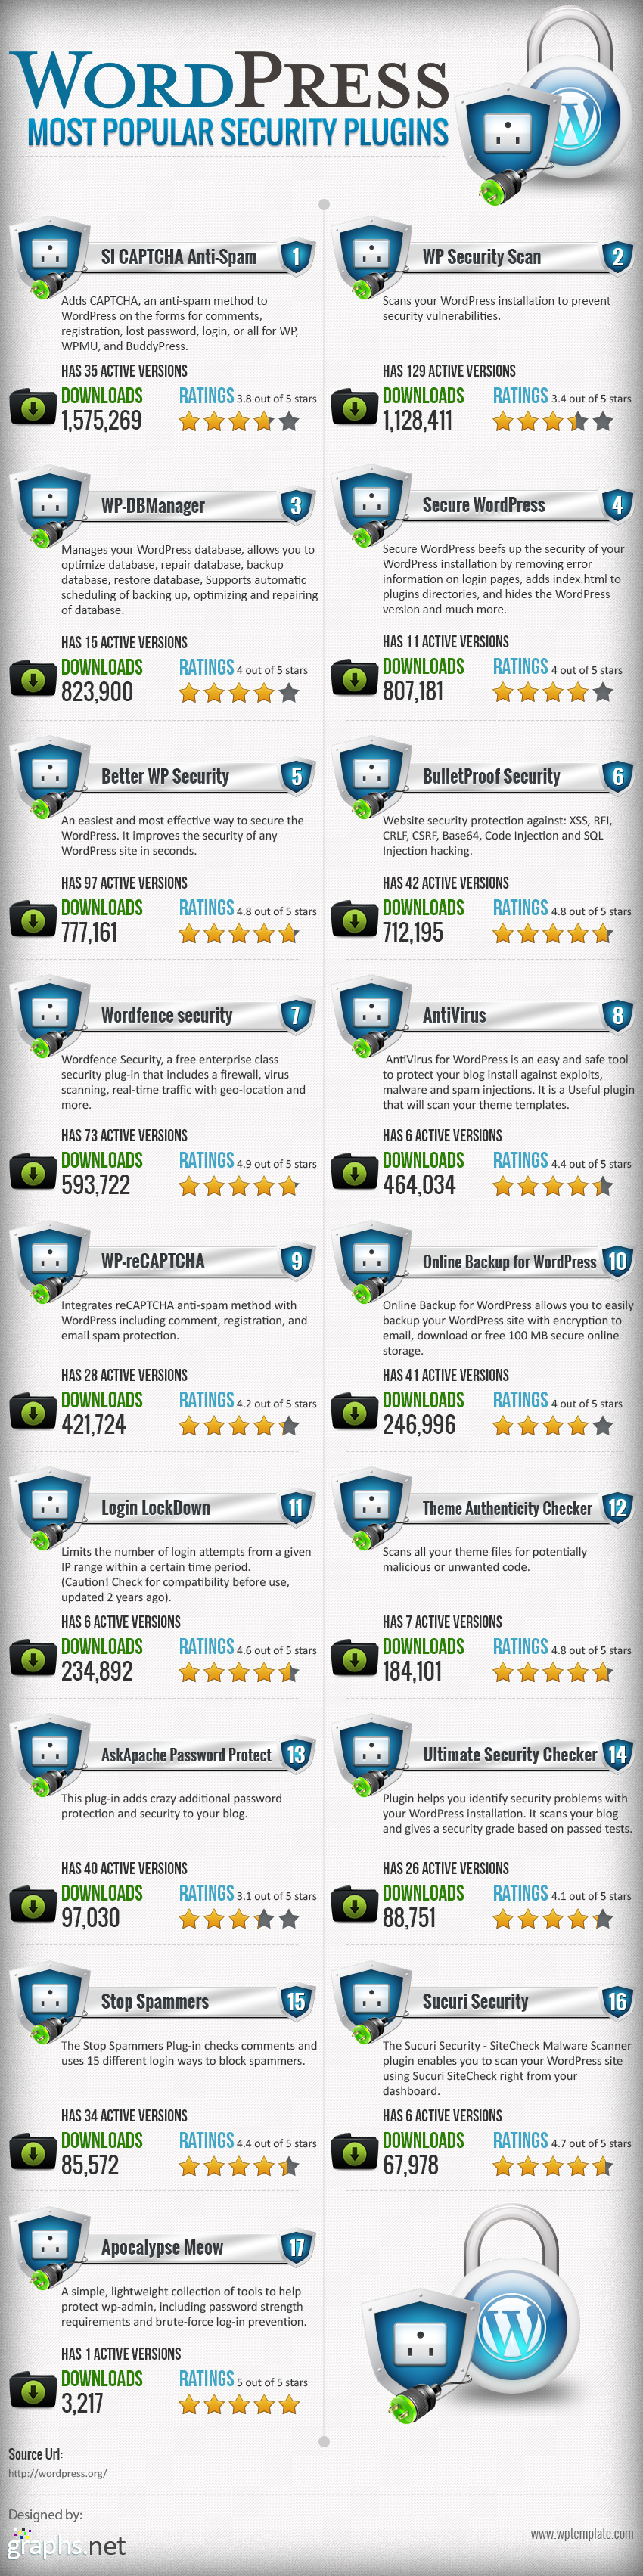 WordPress most popular security plugins